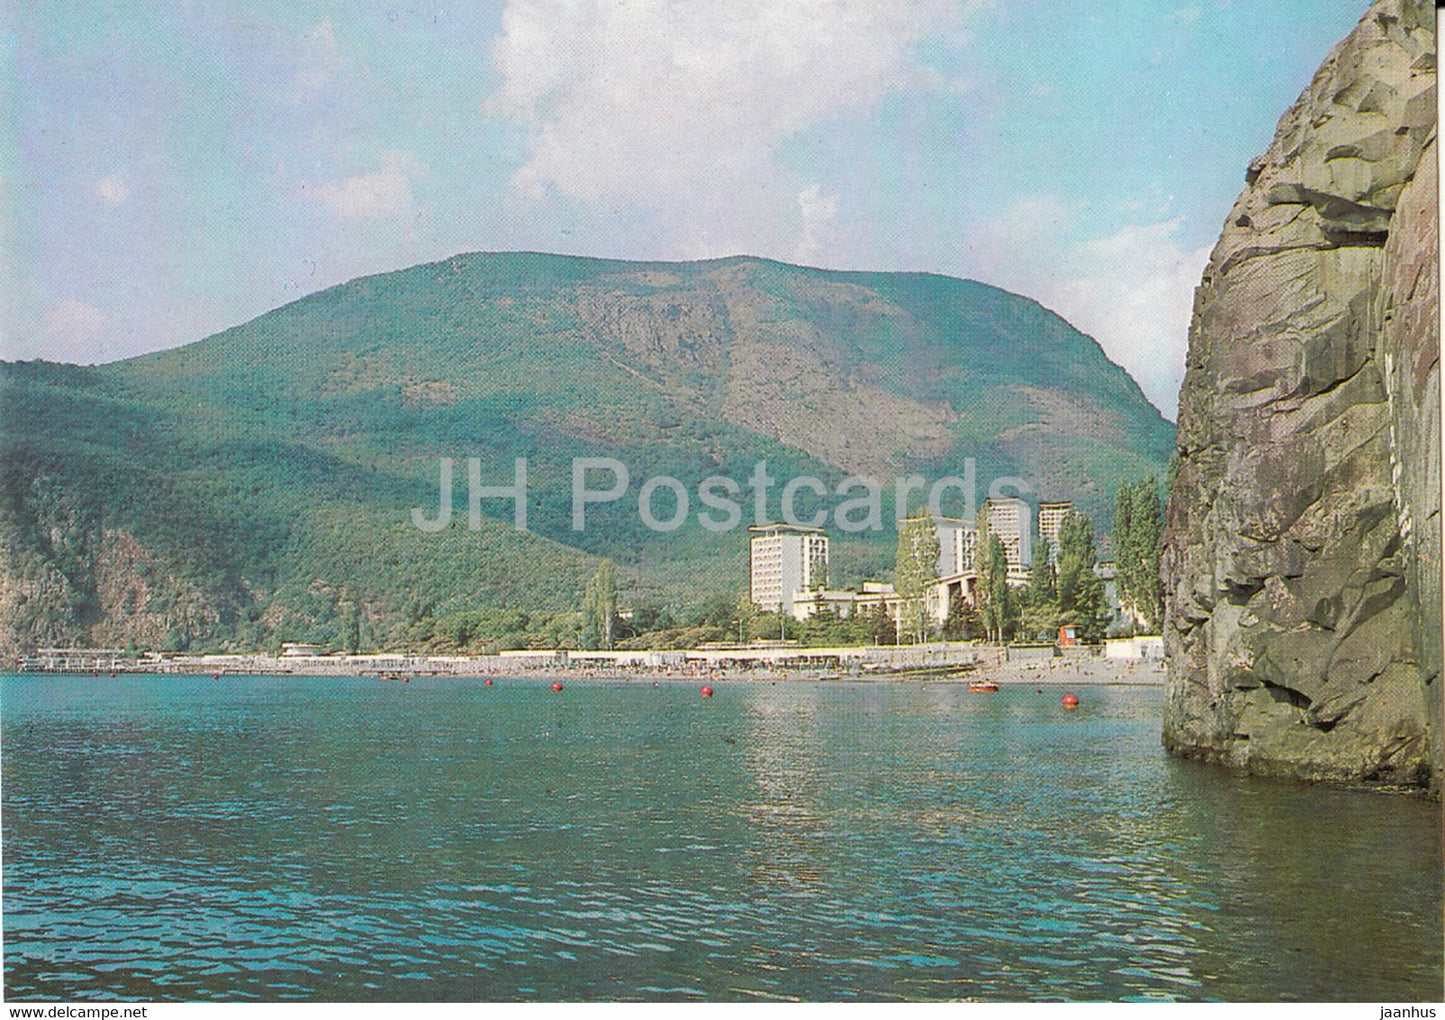 Crimea - Alushta - sanatorium Crimea - postal stationery - 1981 - Ukraine USSR - unused - JH Postcards